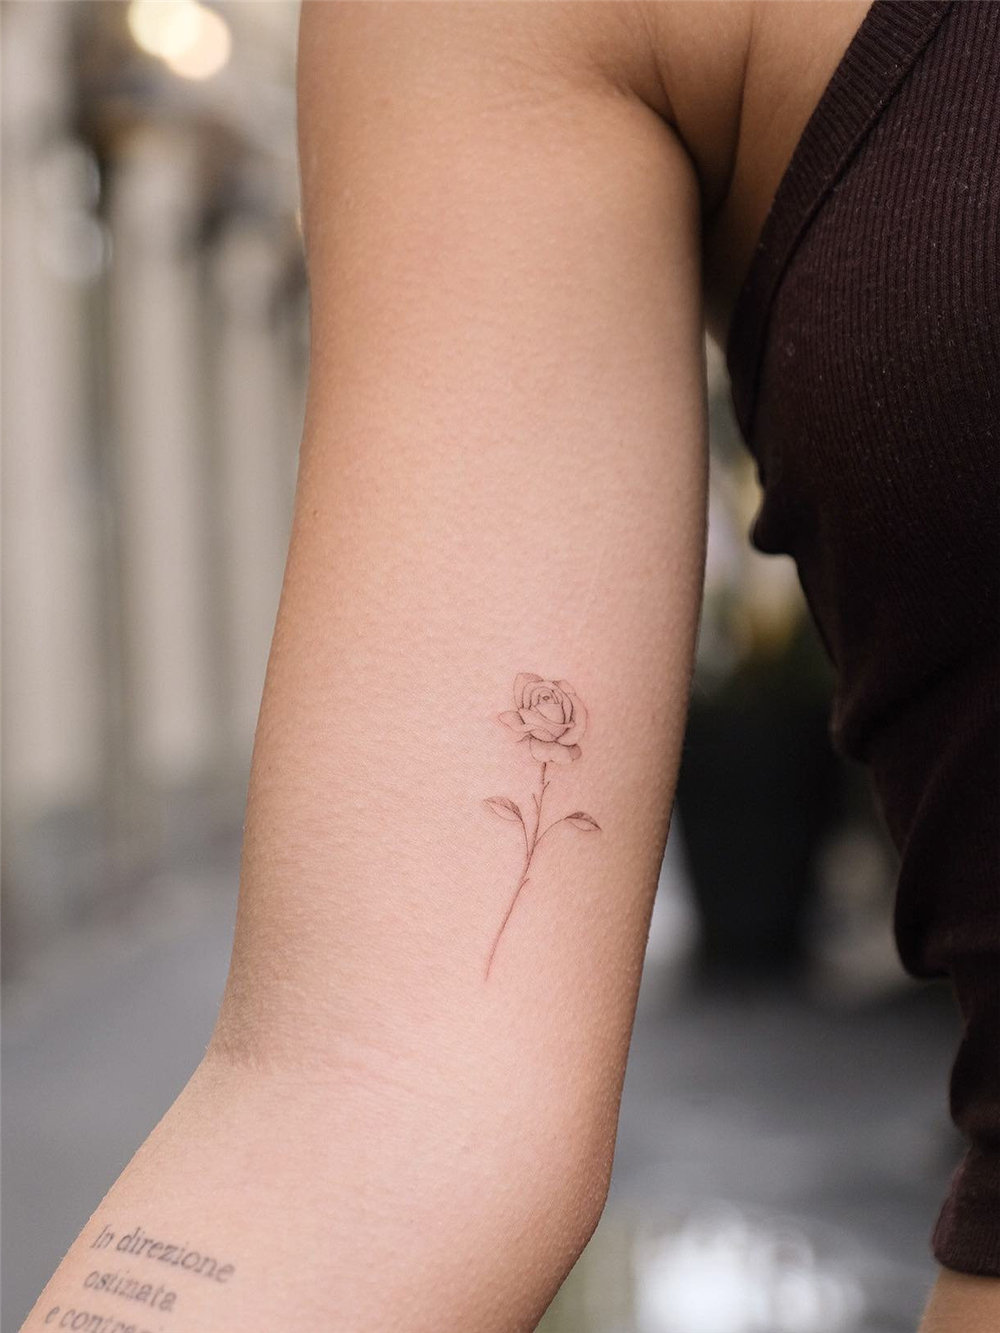 Rose Tattoo Ideas, Beautiful Rose Tattoos for Women, fineline rose tattoo ideas, simple rose tattoo designs